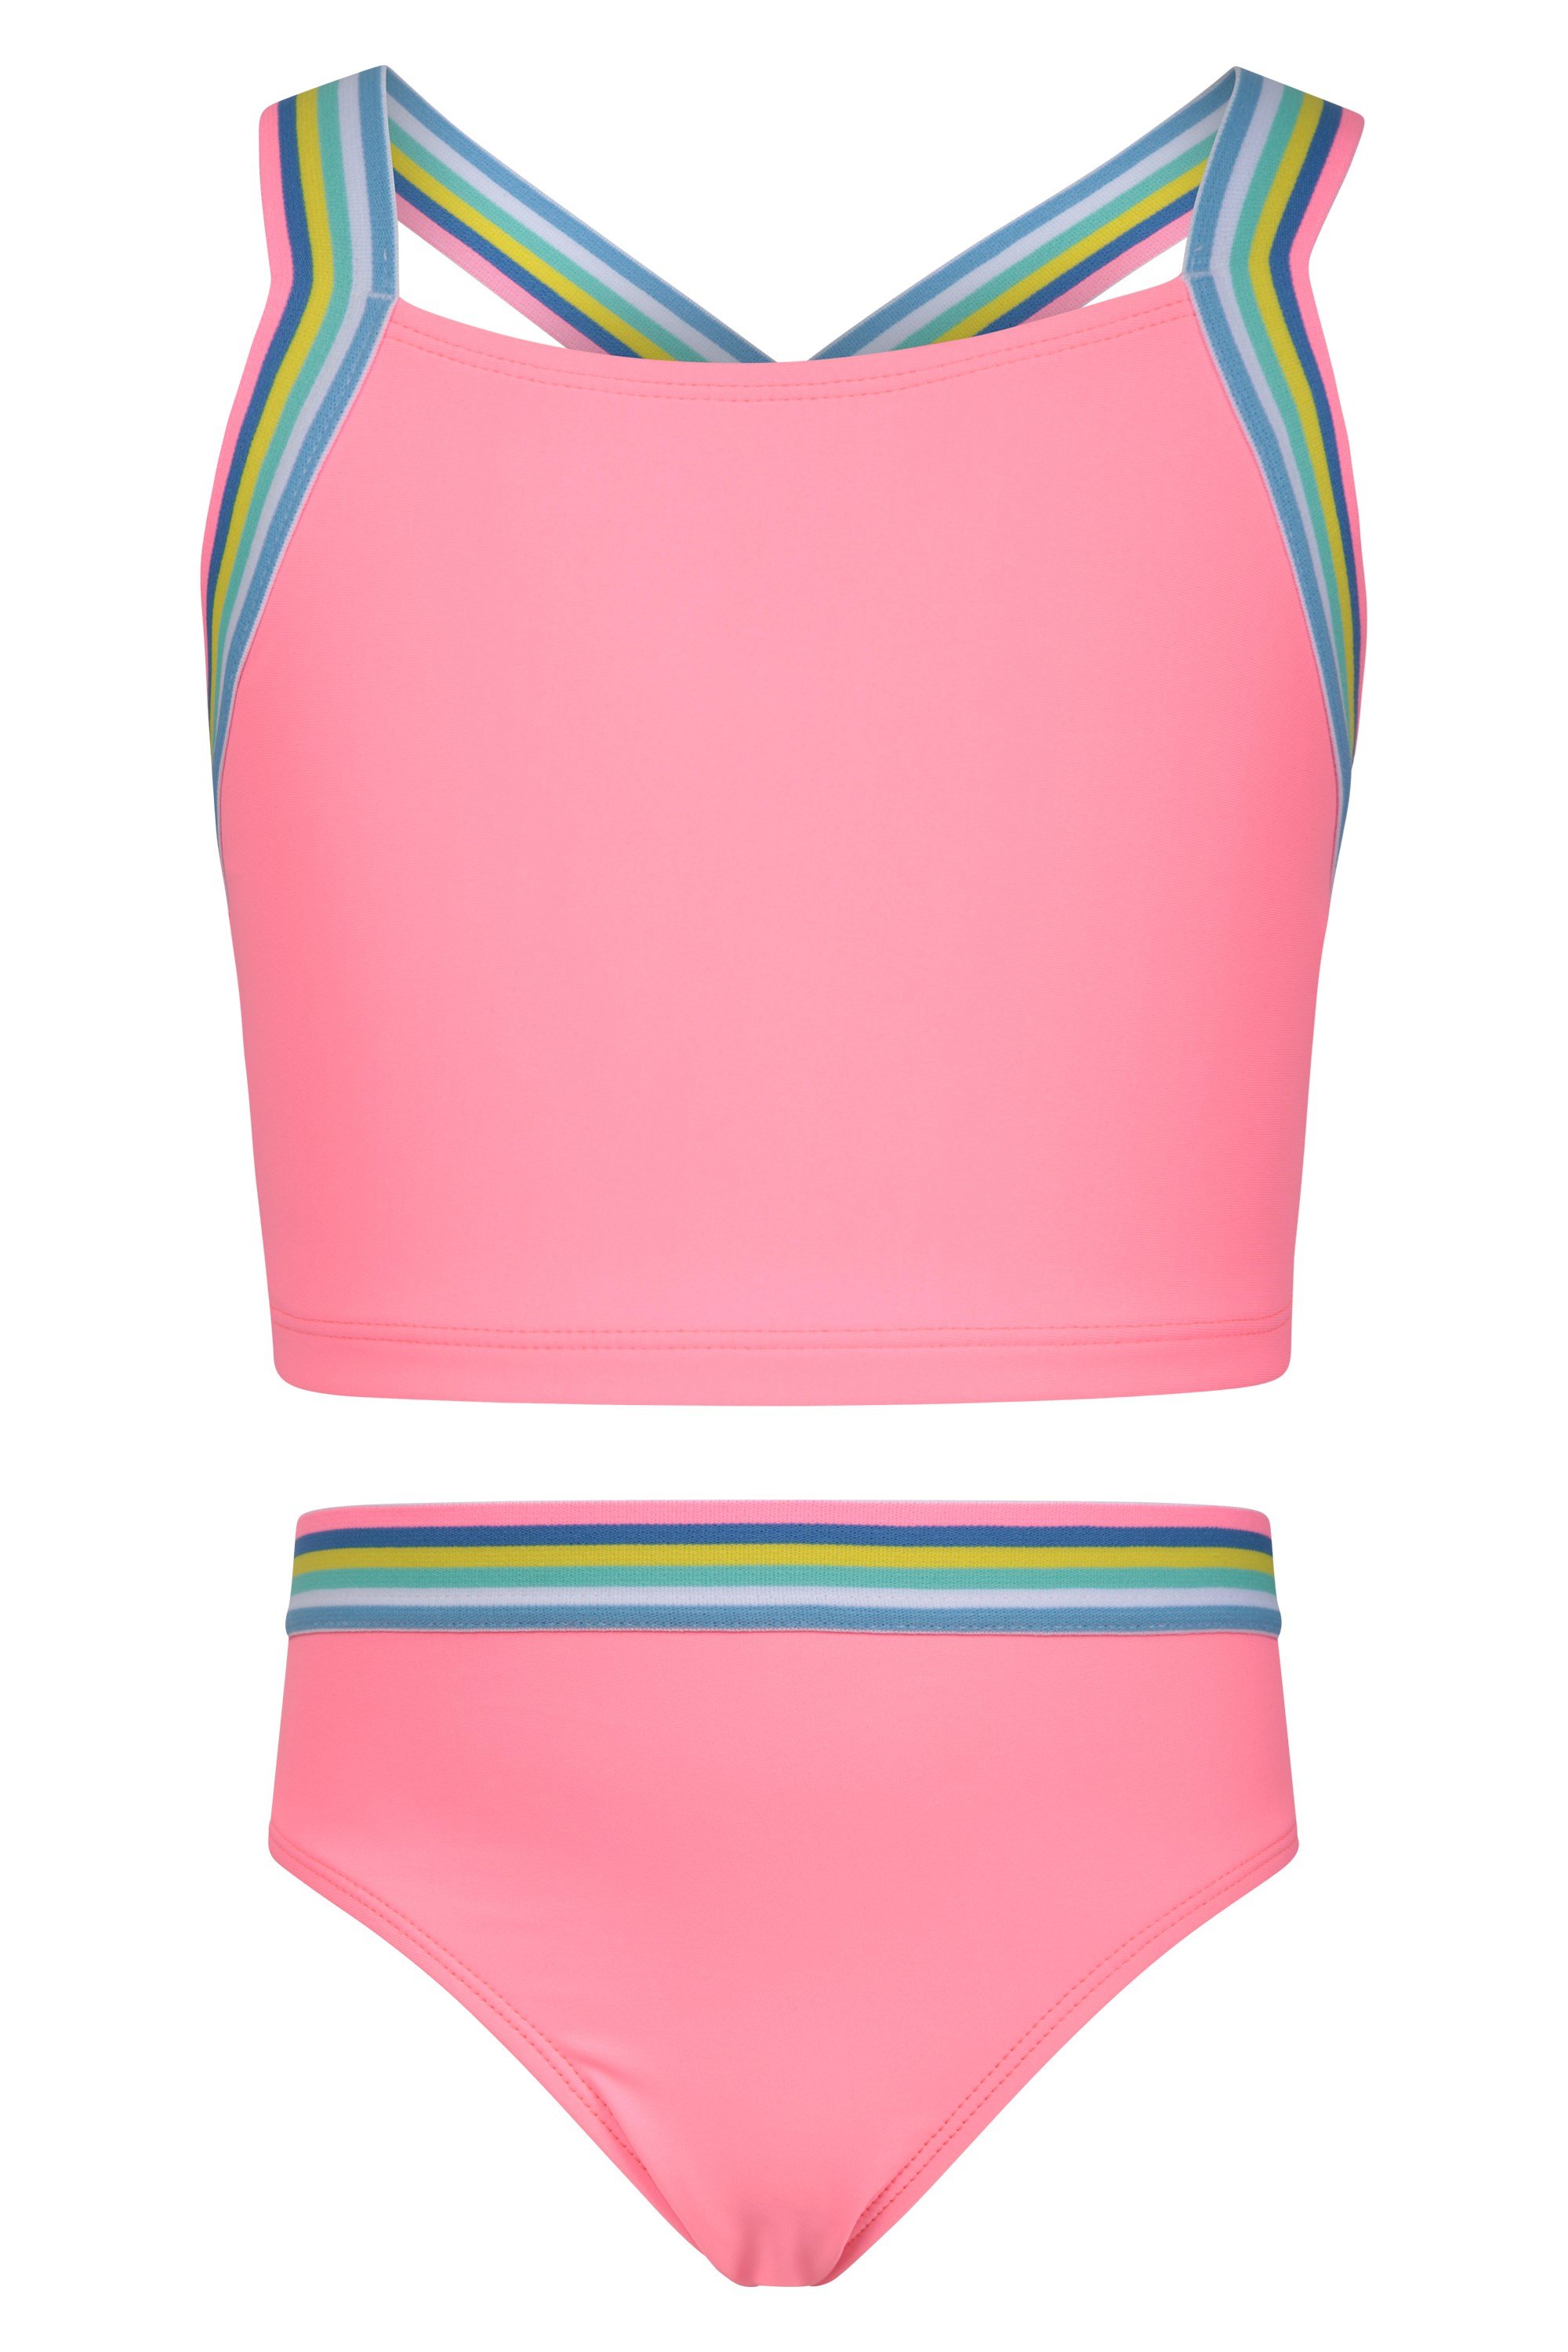 Mountain Warehouse Mountain Warehouse Kids Printed Tankini Set Quick Dry Summer Beach Swim Suit 